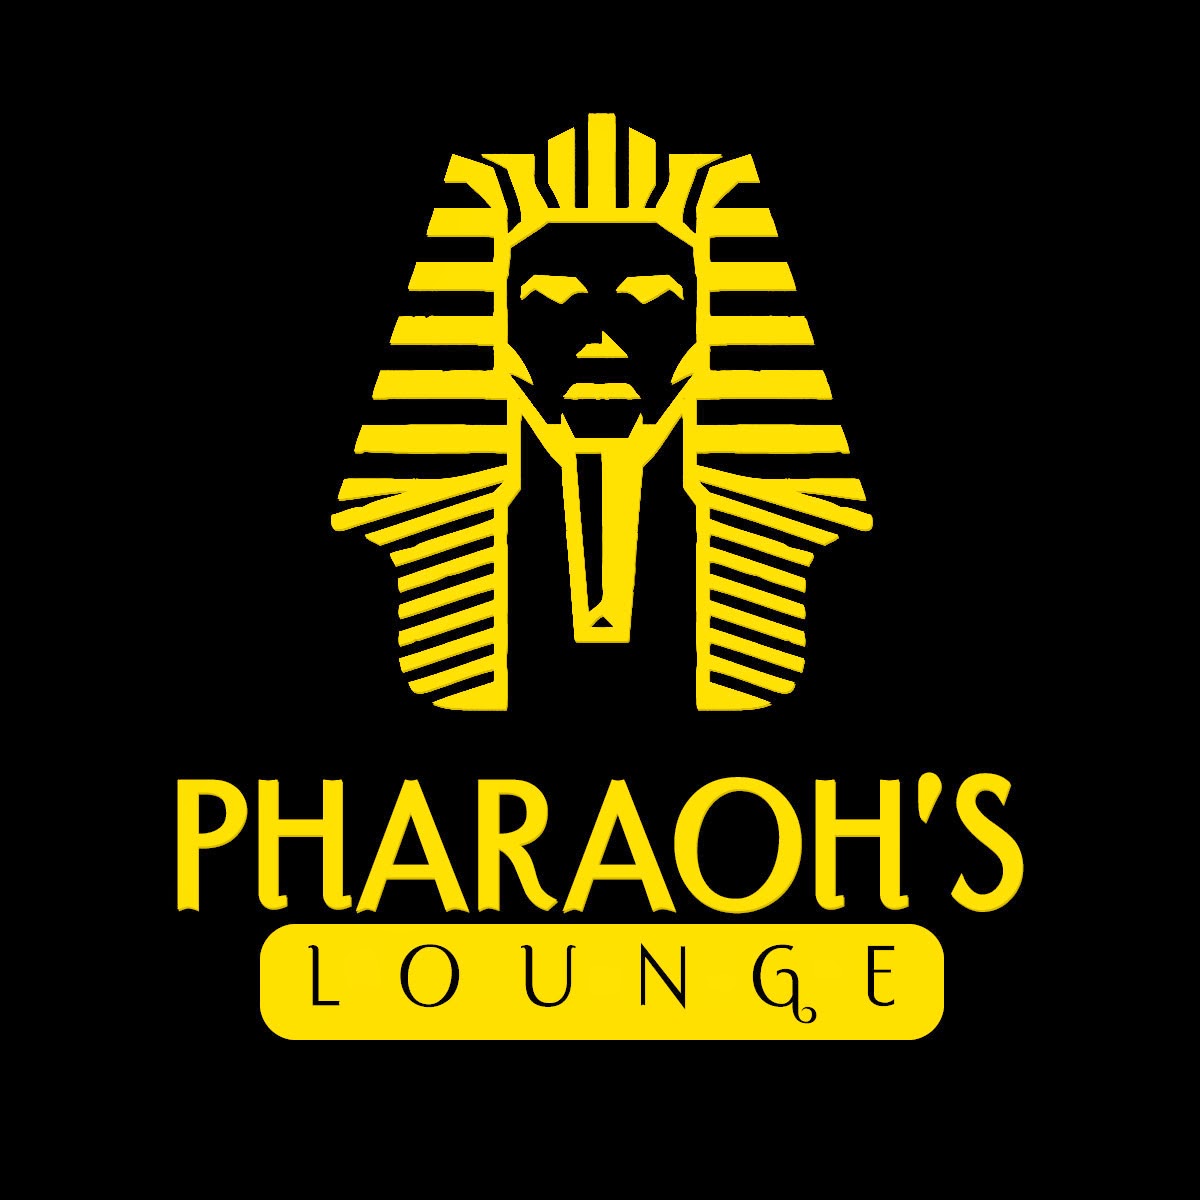 Pharaoh's Hookah Lounge Coupons near me in San diego, CA ...